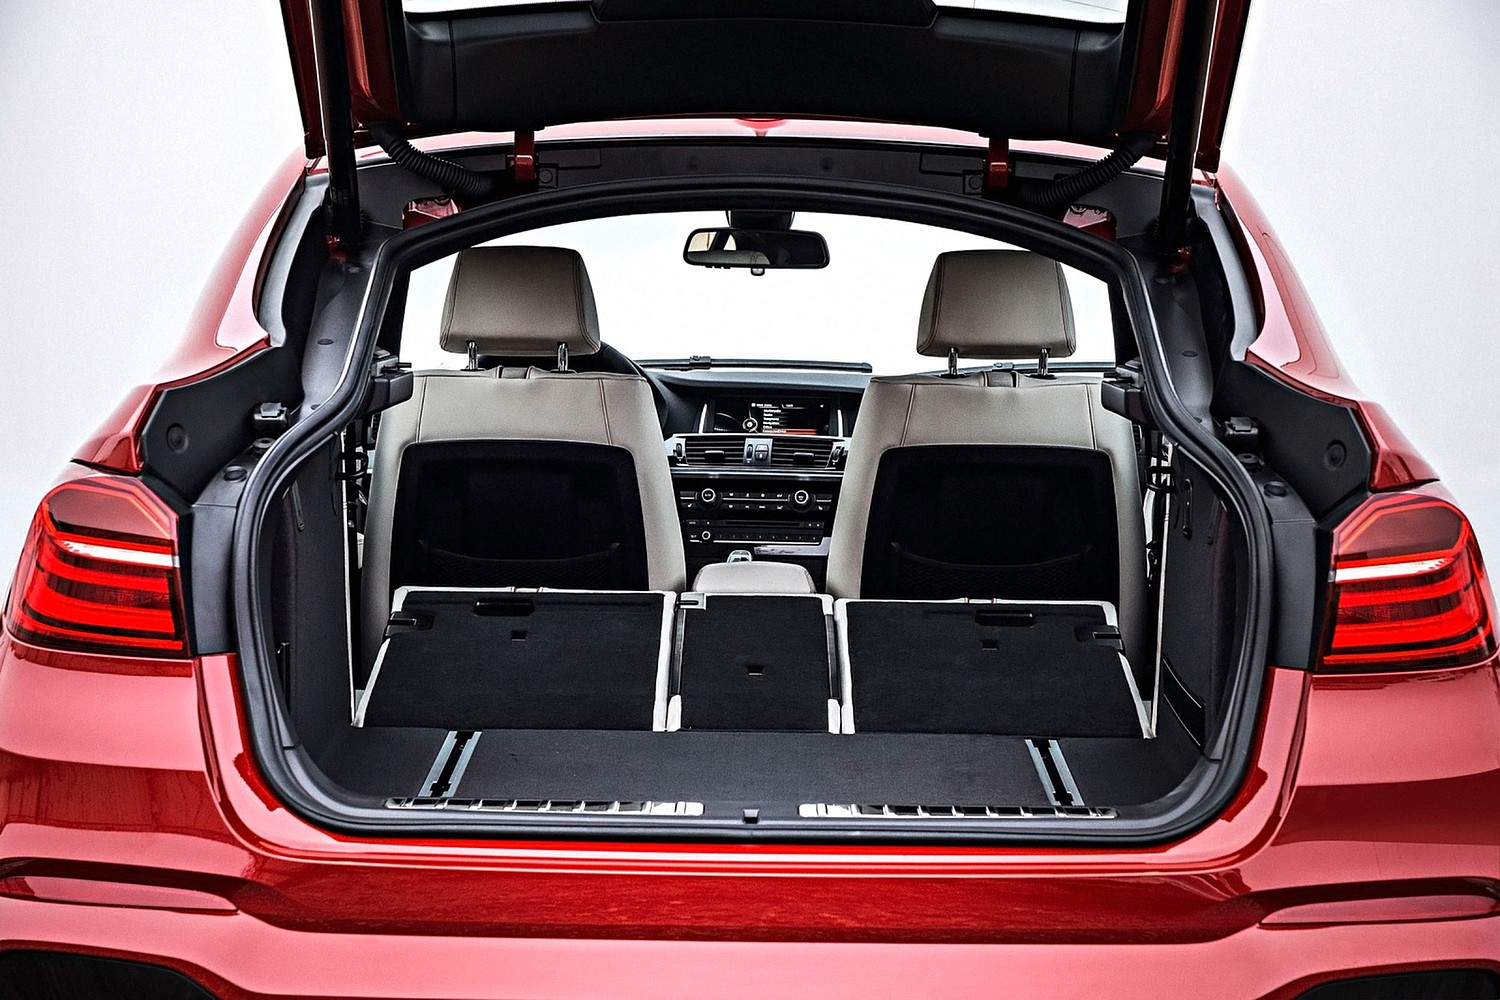 BMW X4 xDrive35i 4dr SUV Interior (2015 model year shown)